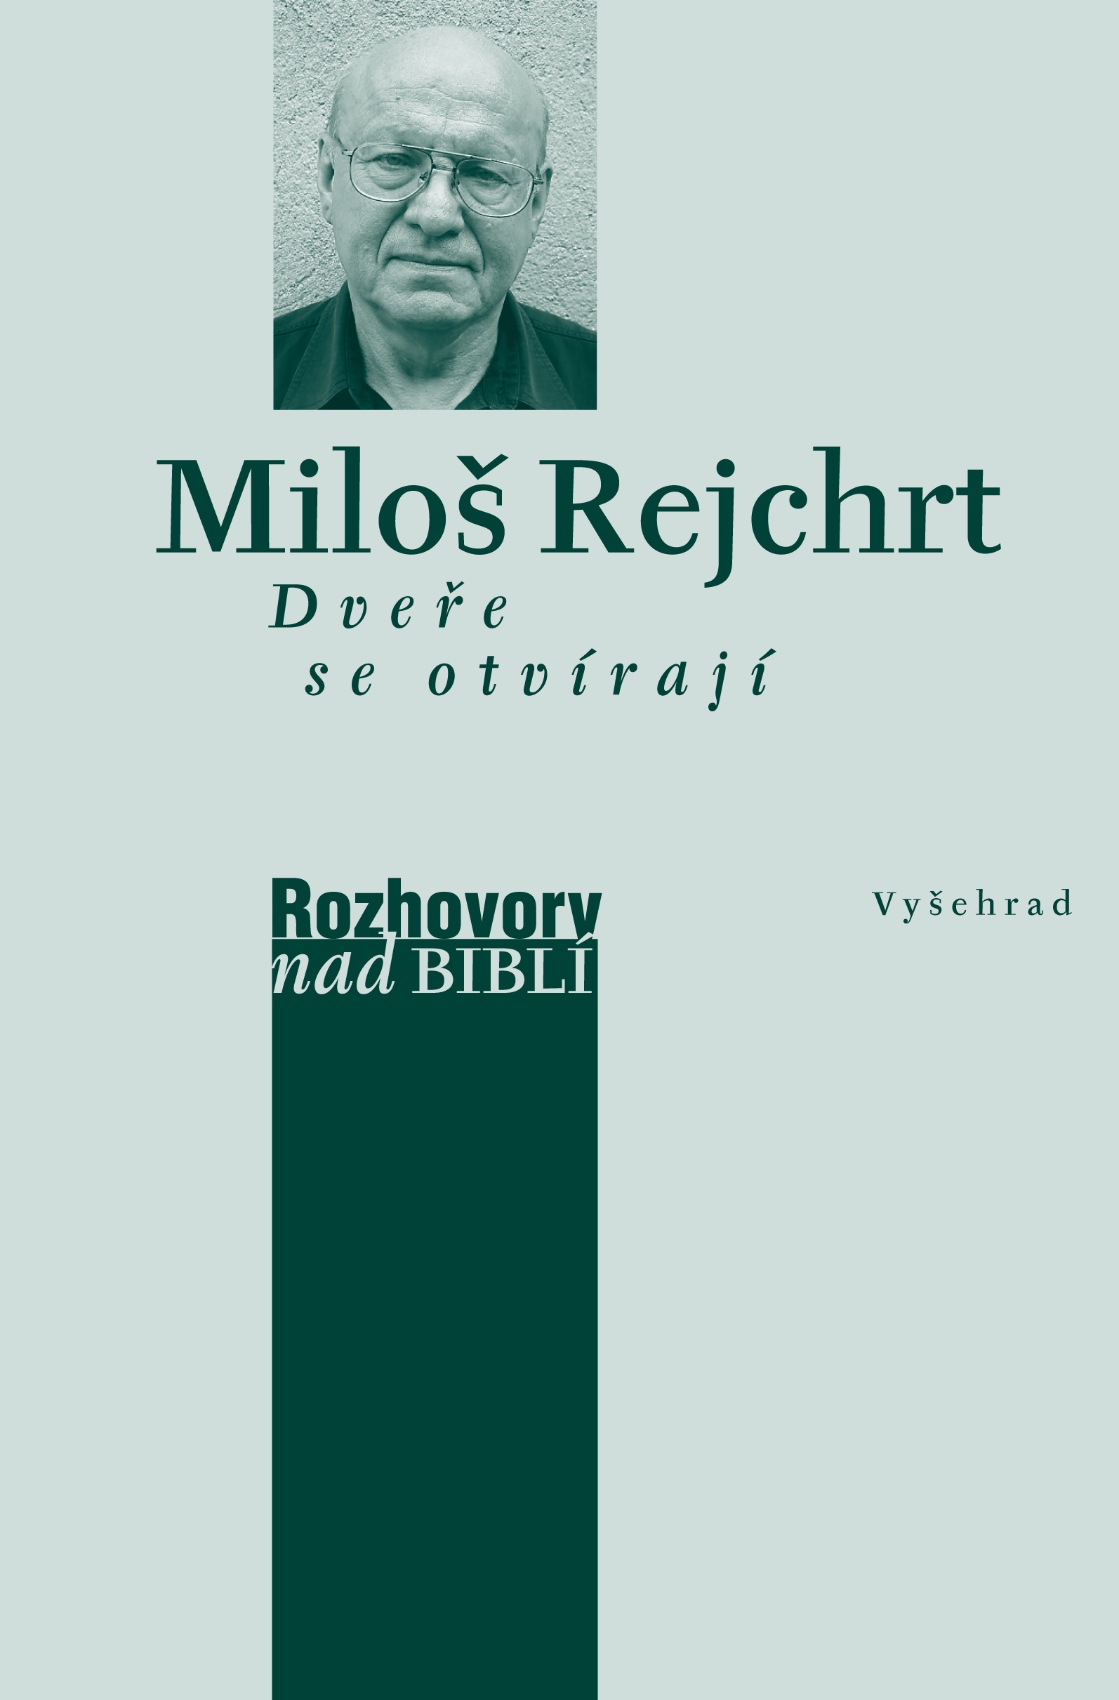 Miloš Rejchrt: The Doors Open